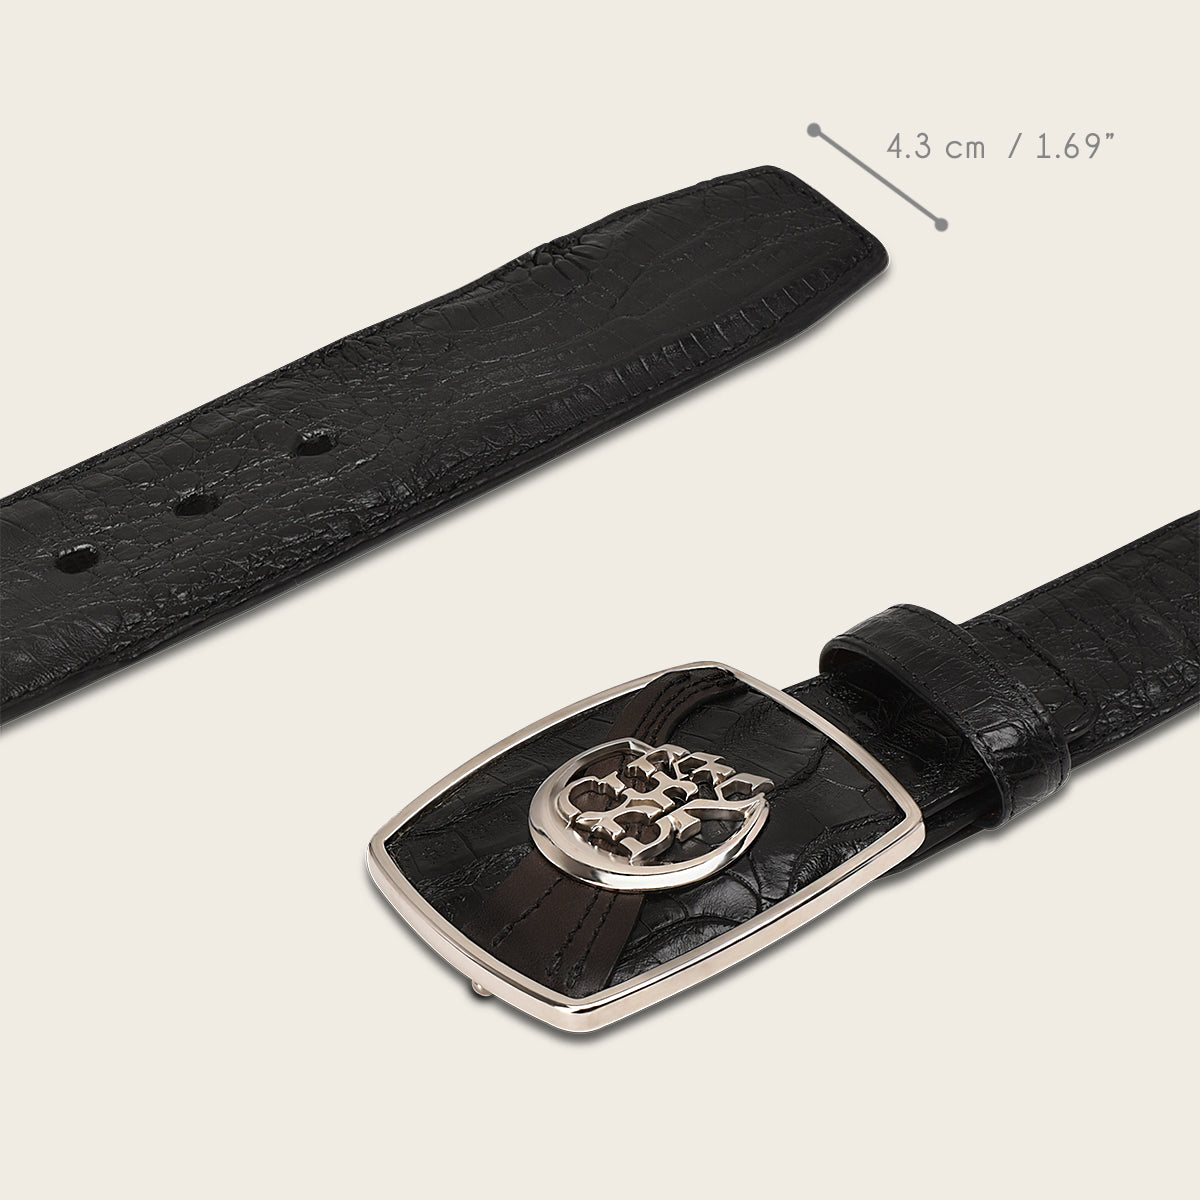 Engraved black high exotic leather western belt with Cuadra monogram